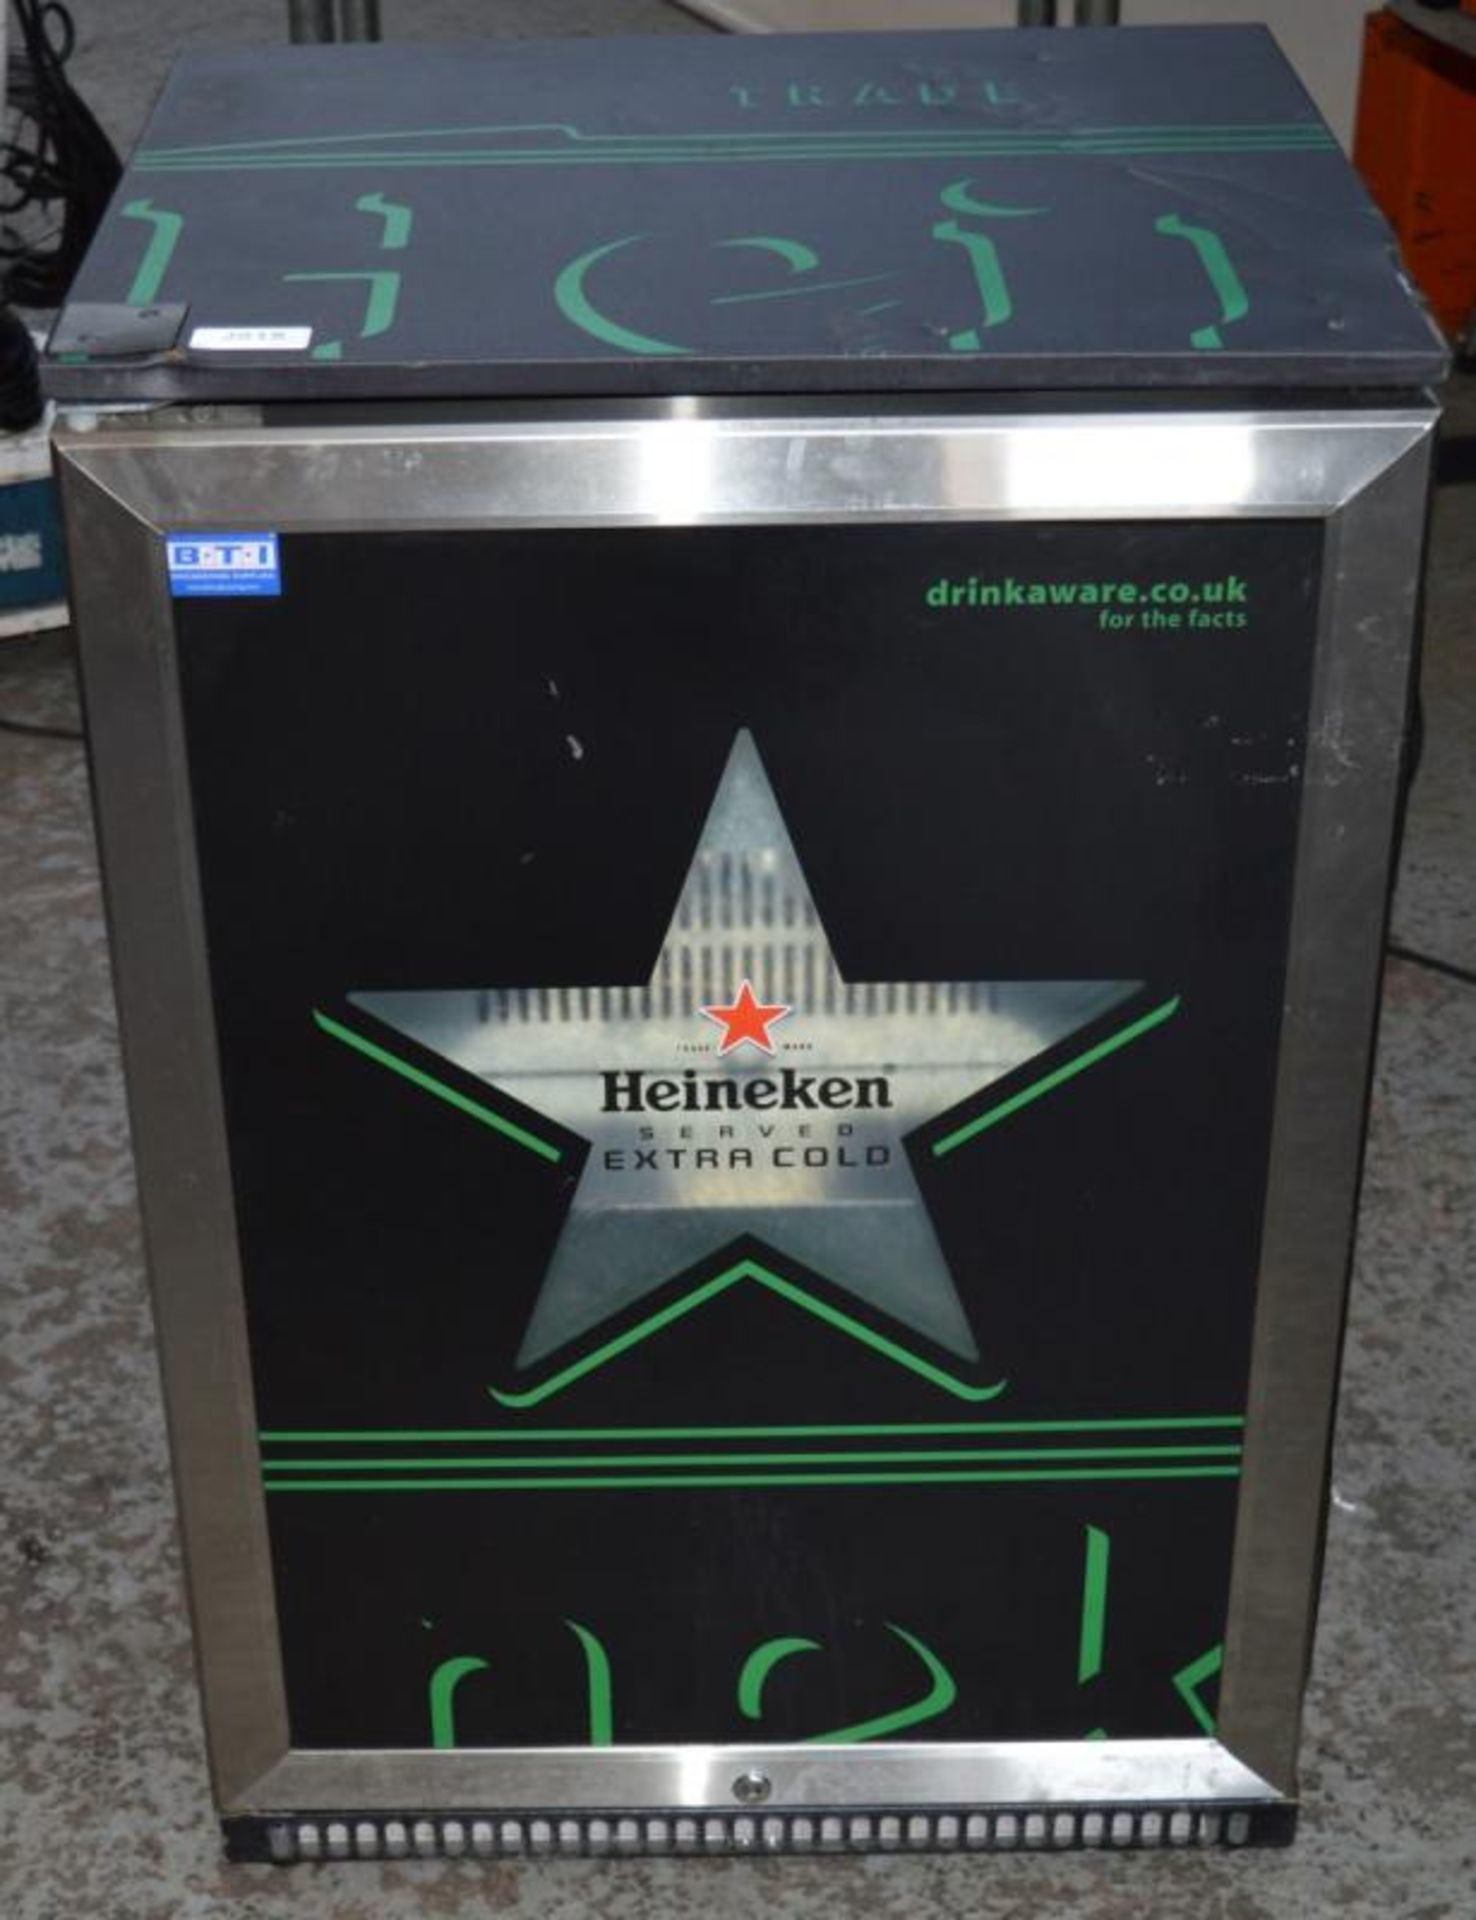 1 x Heineken Backbar Bottle Cooler - Model AHT 150 Froster SS - CL290 - Ref J915 - Location: